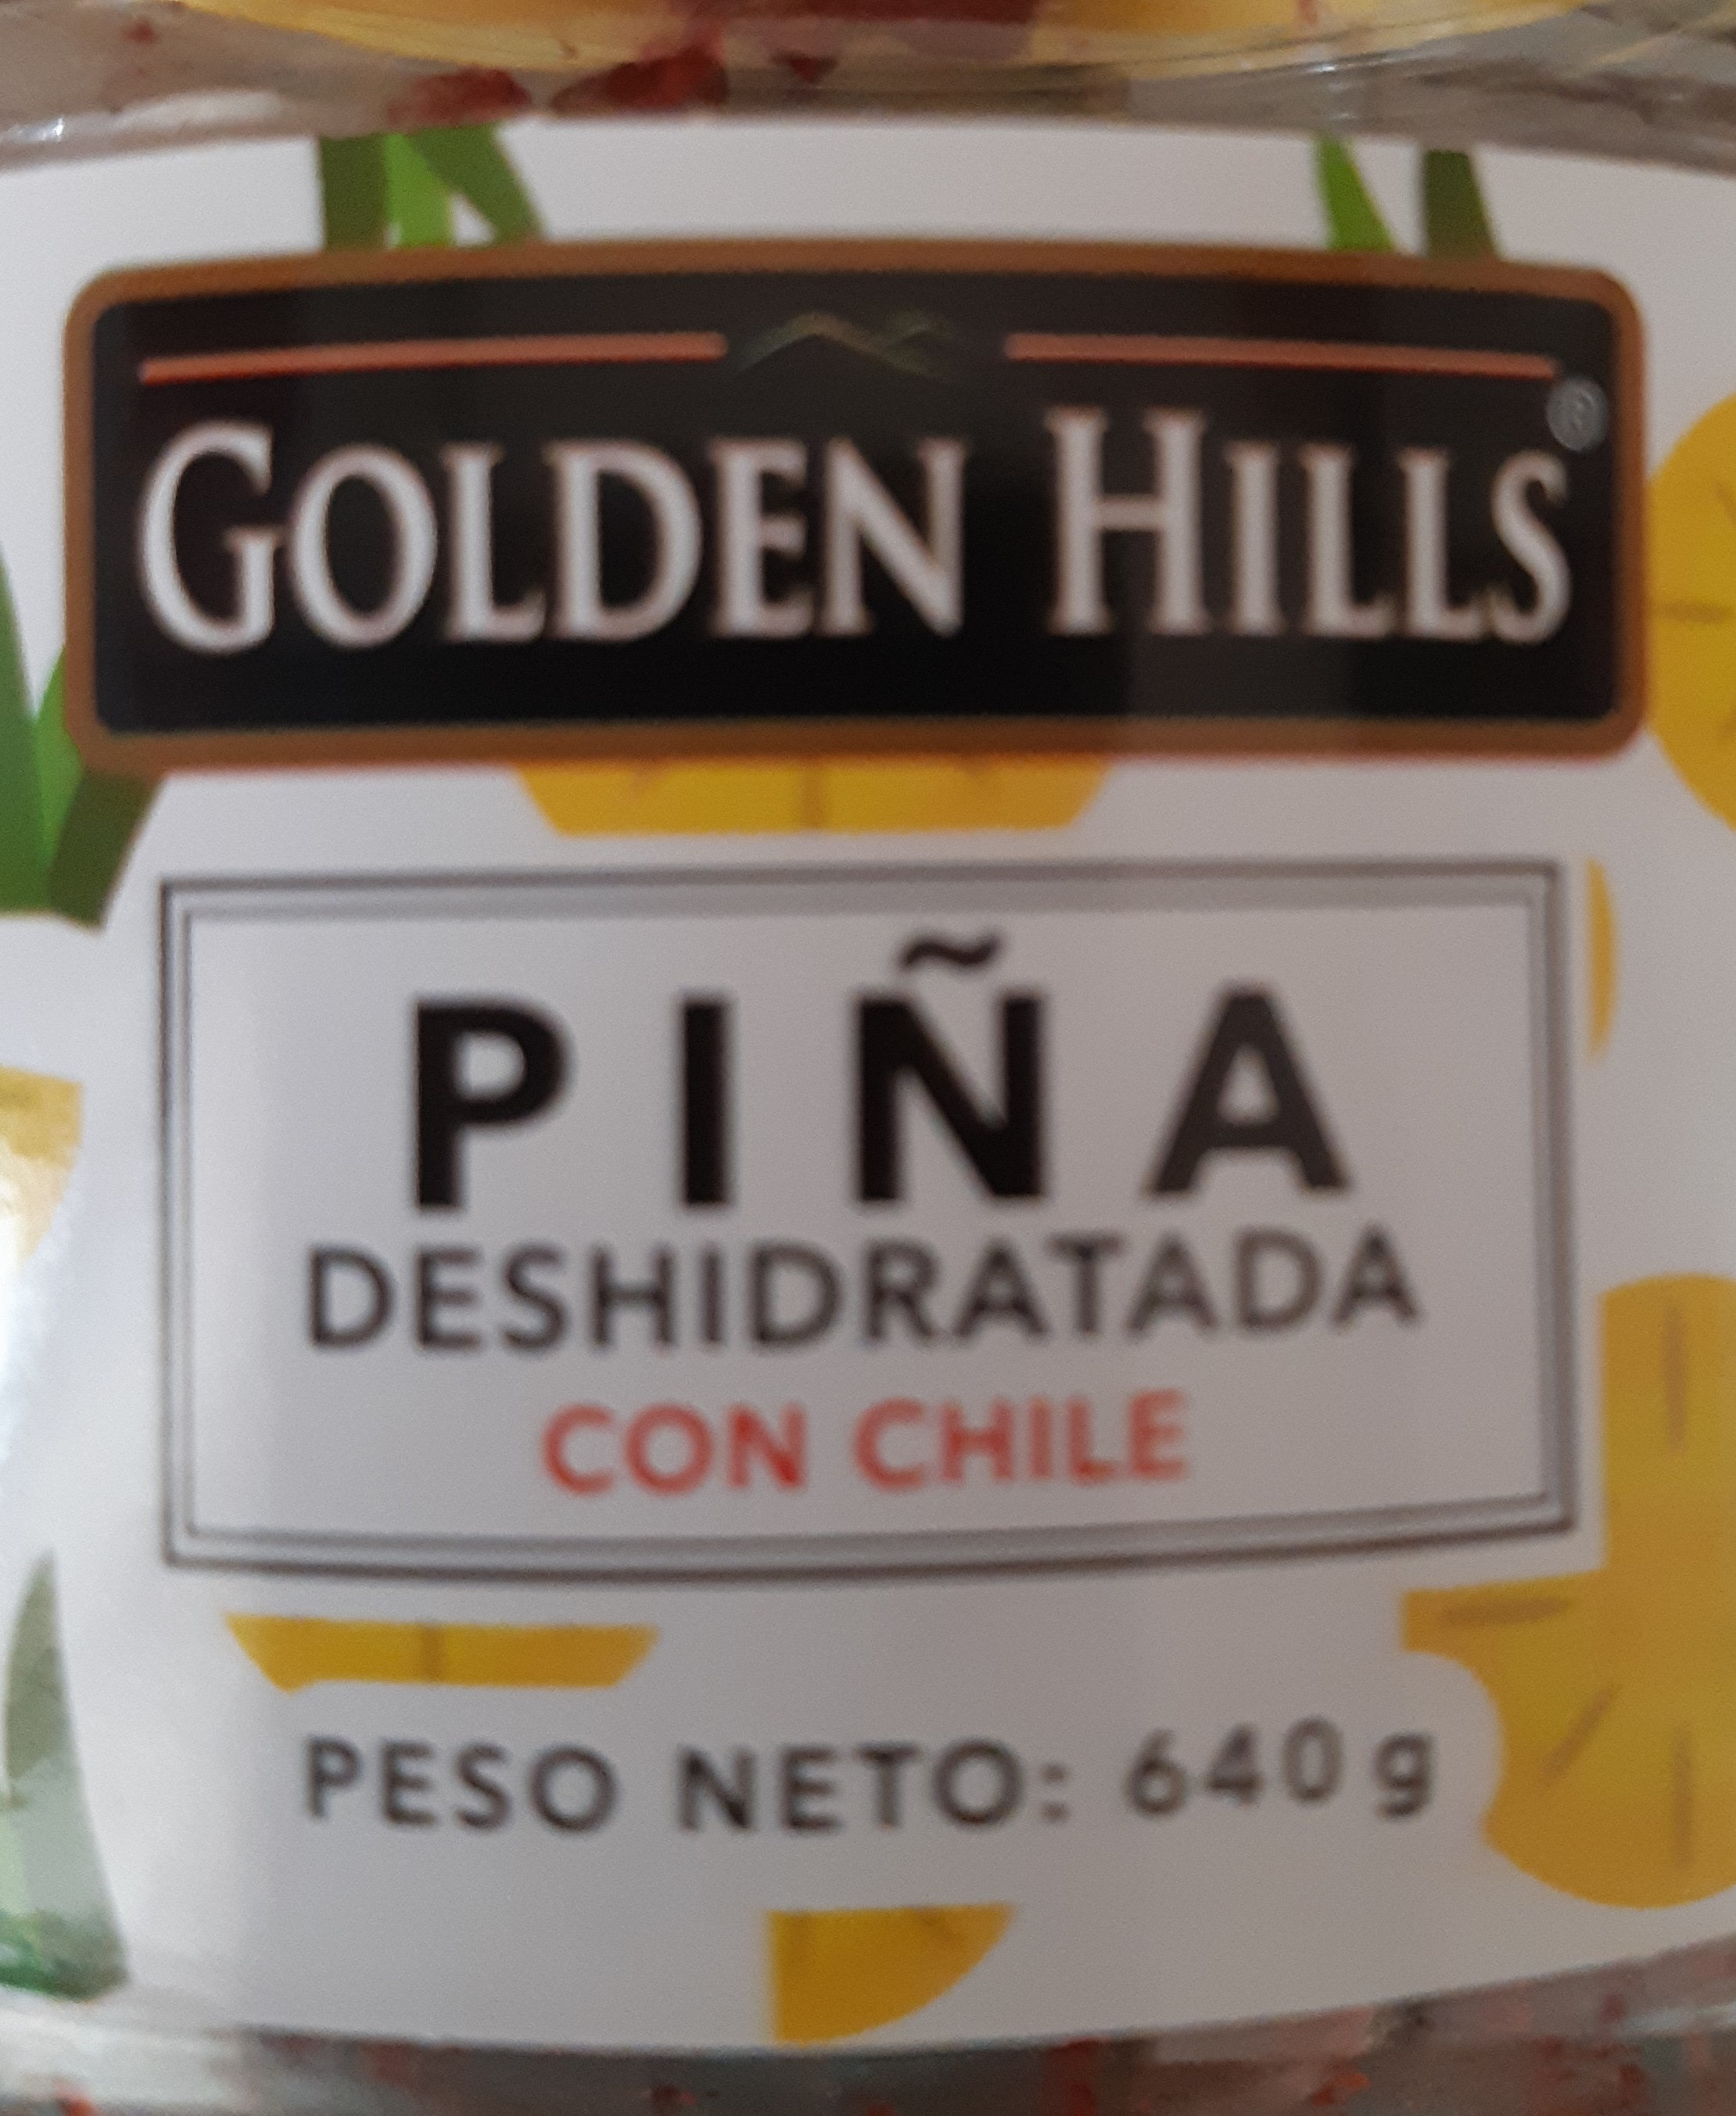 Piña deshidratada con chile - Producto